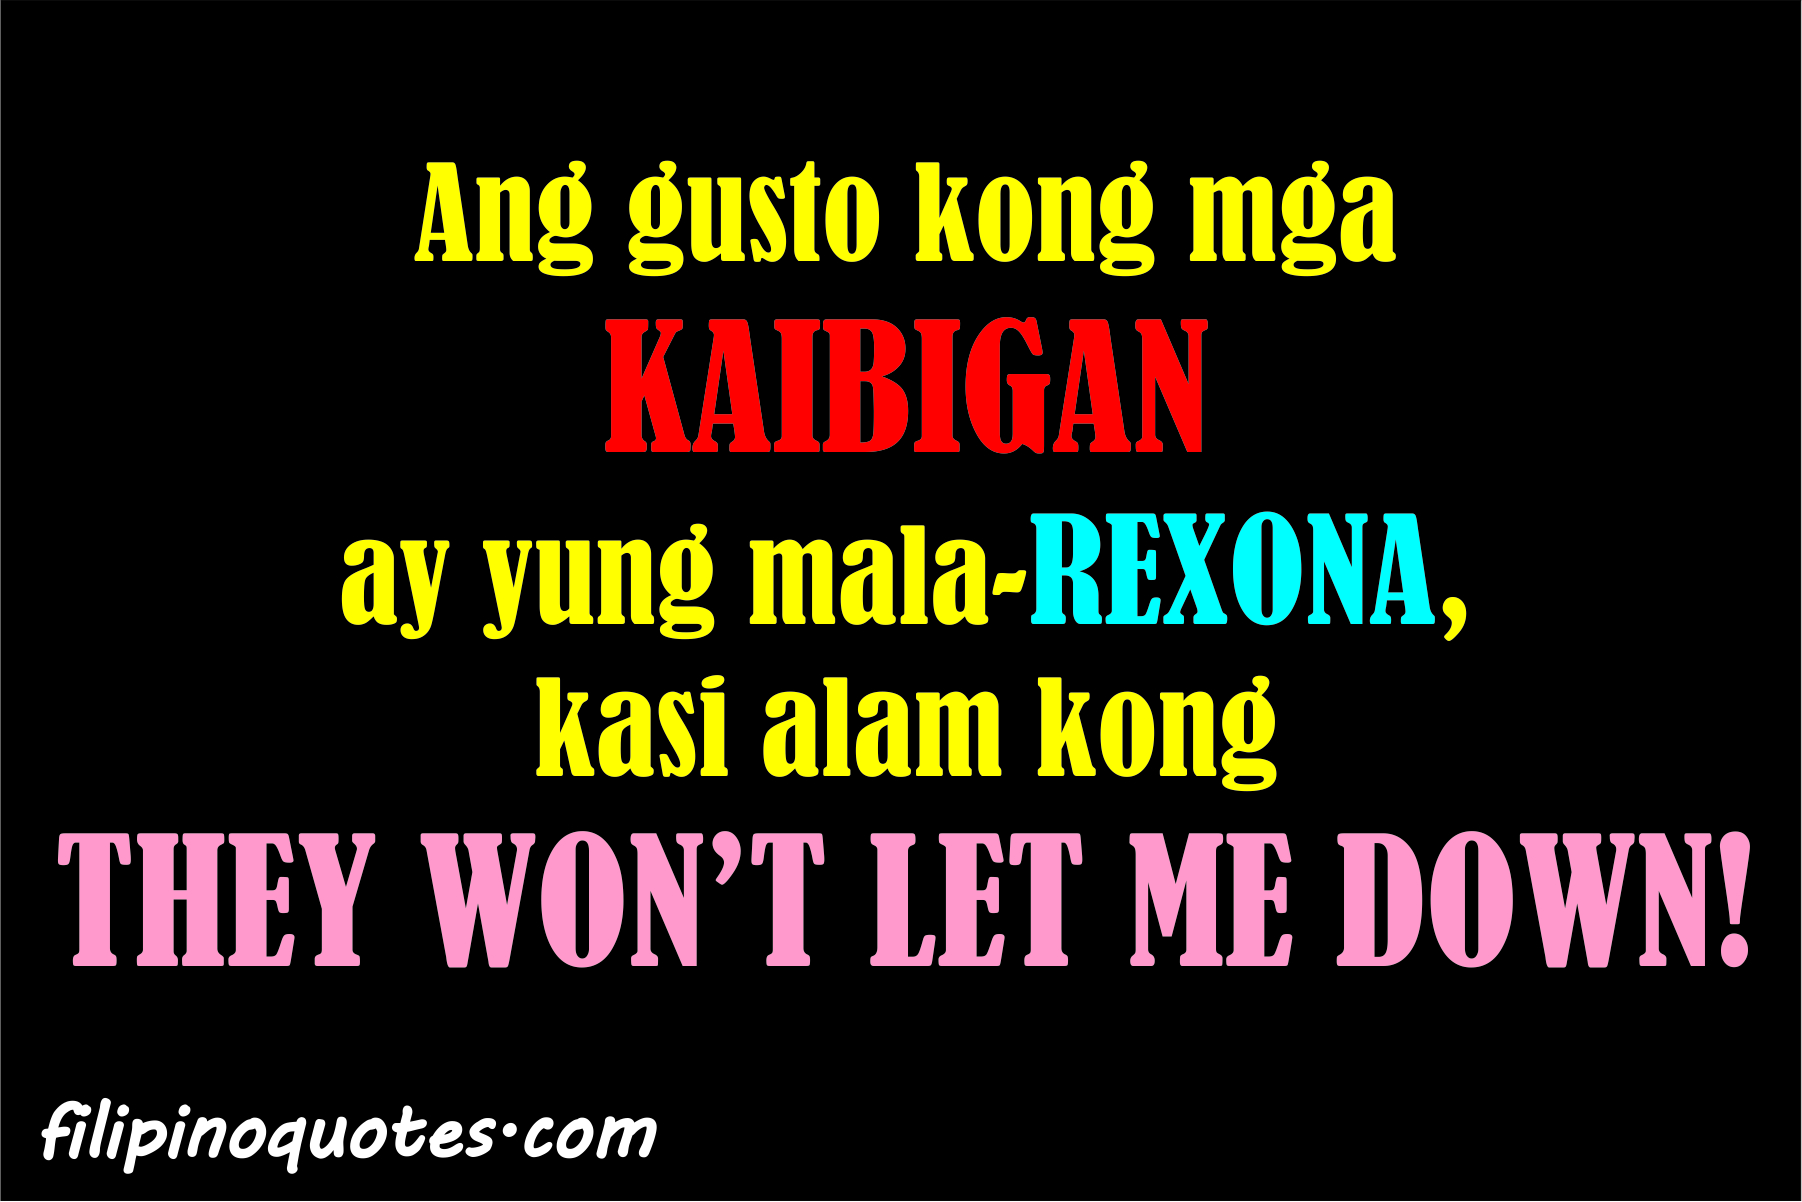 Best Tagalog Quotes About Life Tagalog Quotesgram Kasabihan